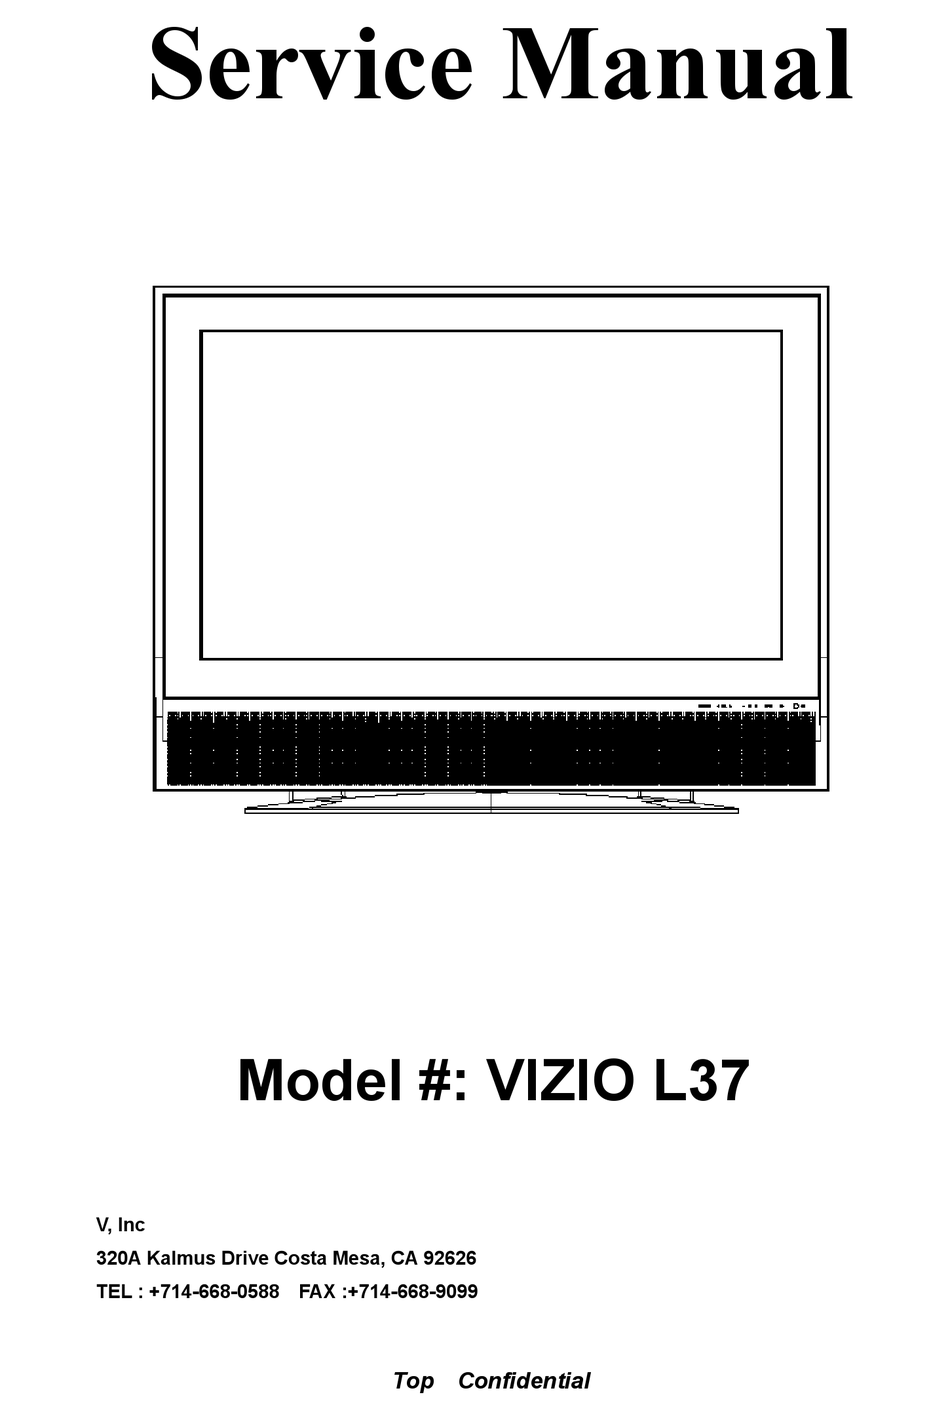 VIZIO L37 SERVICE MANUAL Pdf Download | ManualsLib